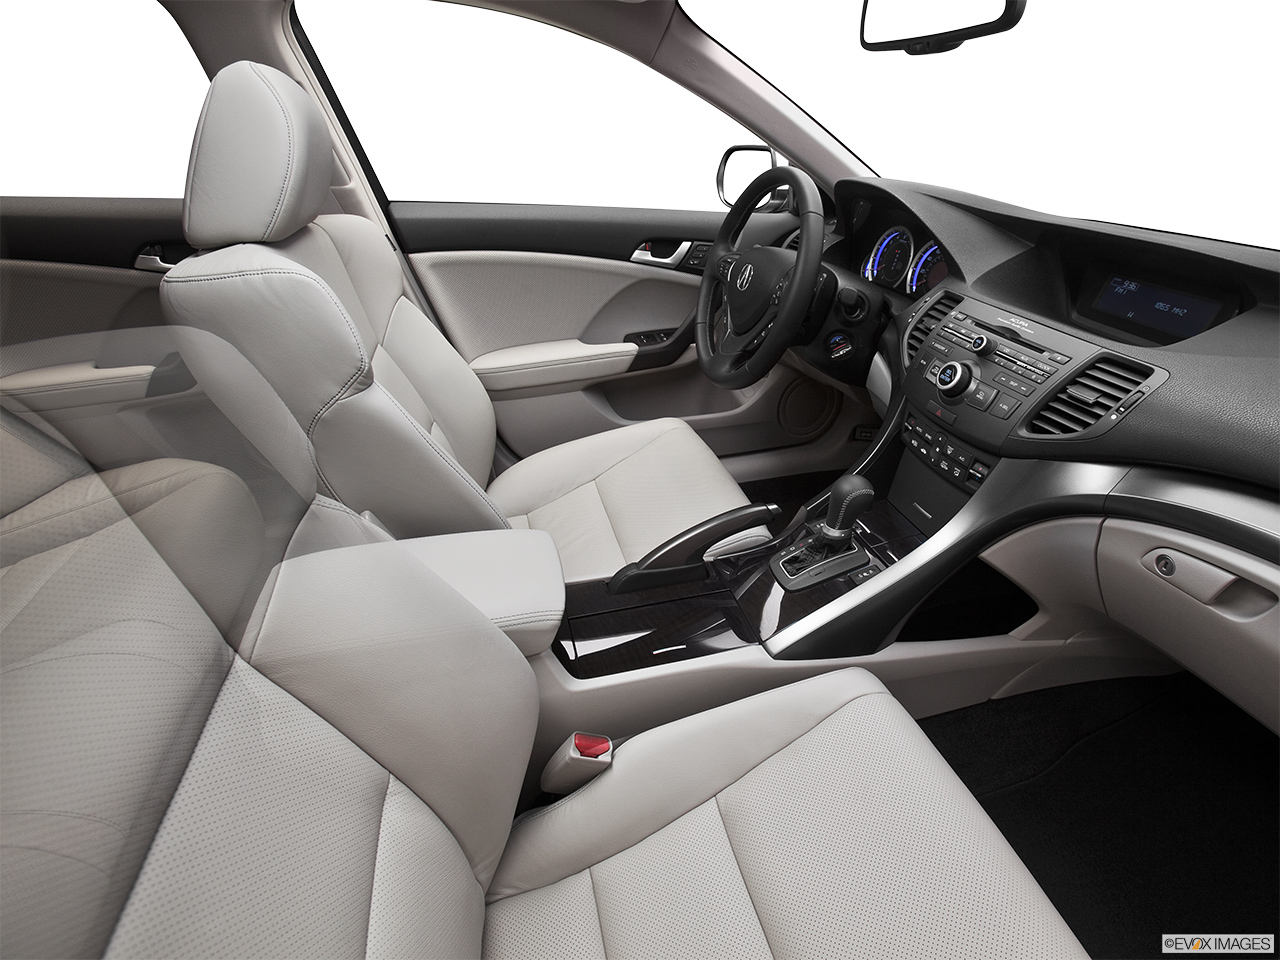 2012 Acura TSX Base Fake Buck Shot - Interior from Passenger B pillar. 